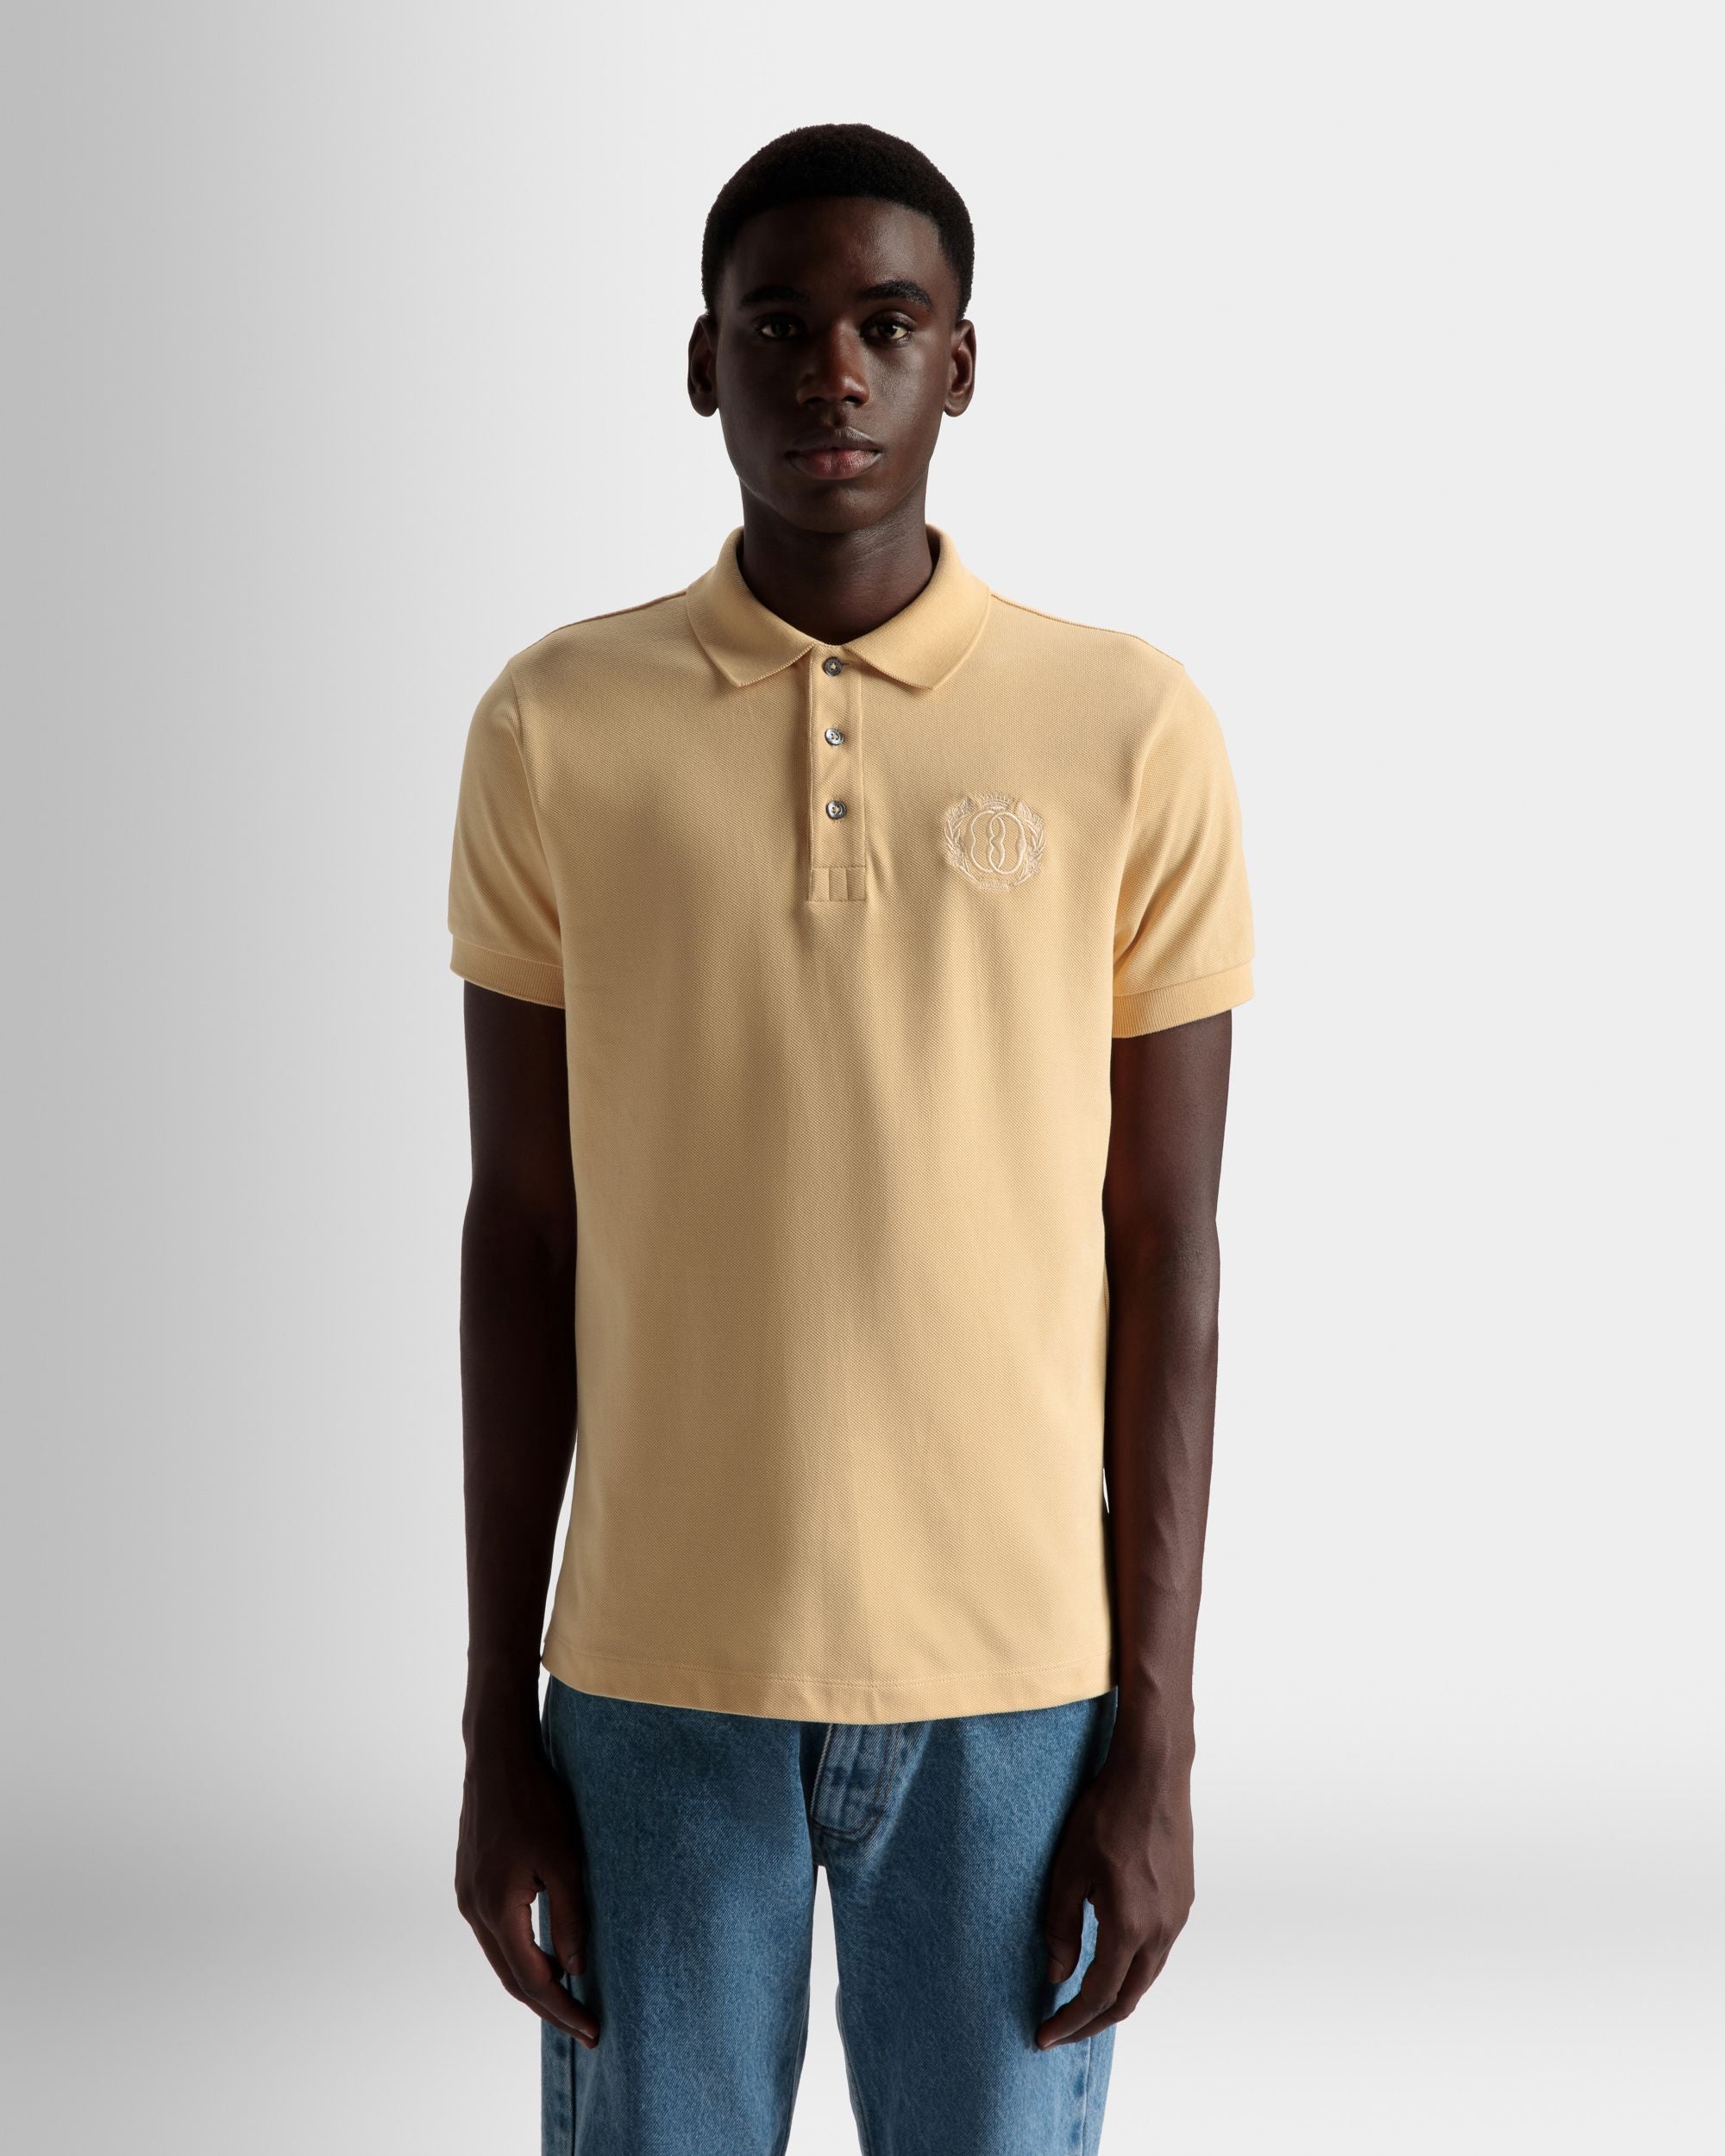 Emblem Poloshirt | Poloshirt für Herren | Cremefarbene Baumwolle | Bally | Model getragen Nahaufnahme